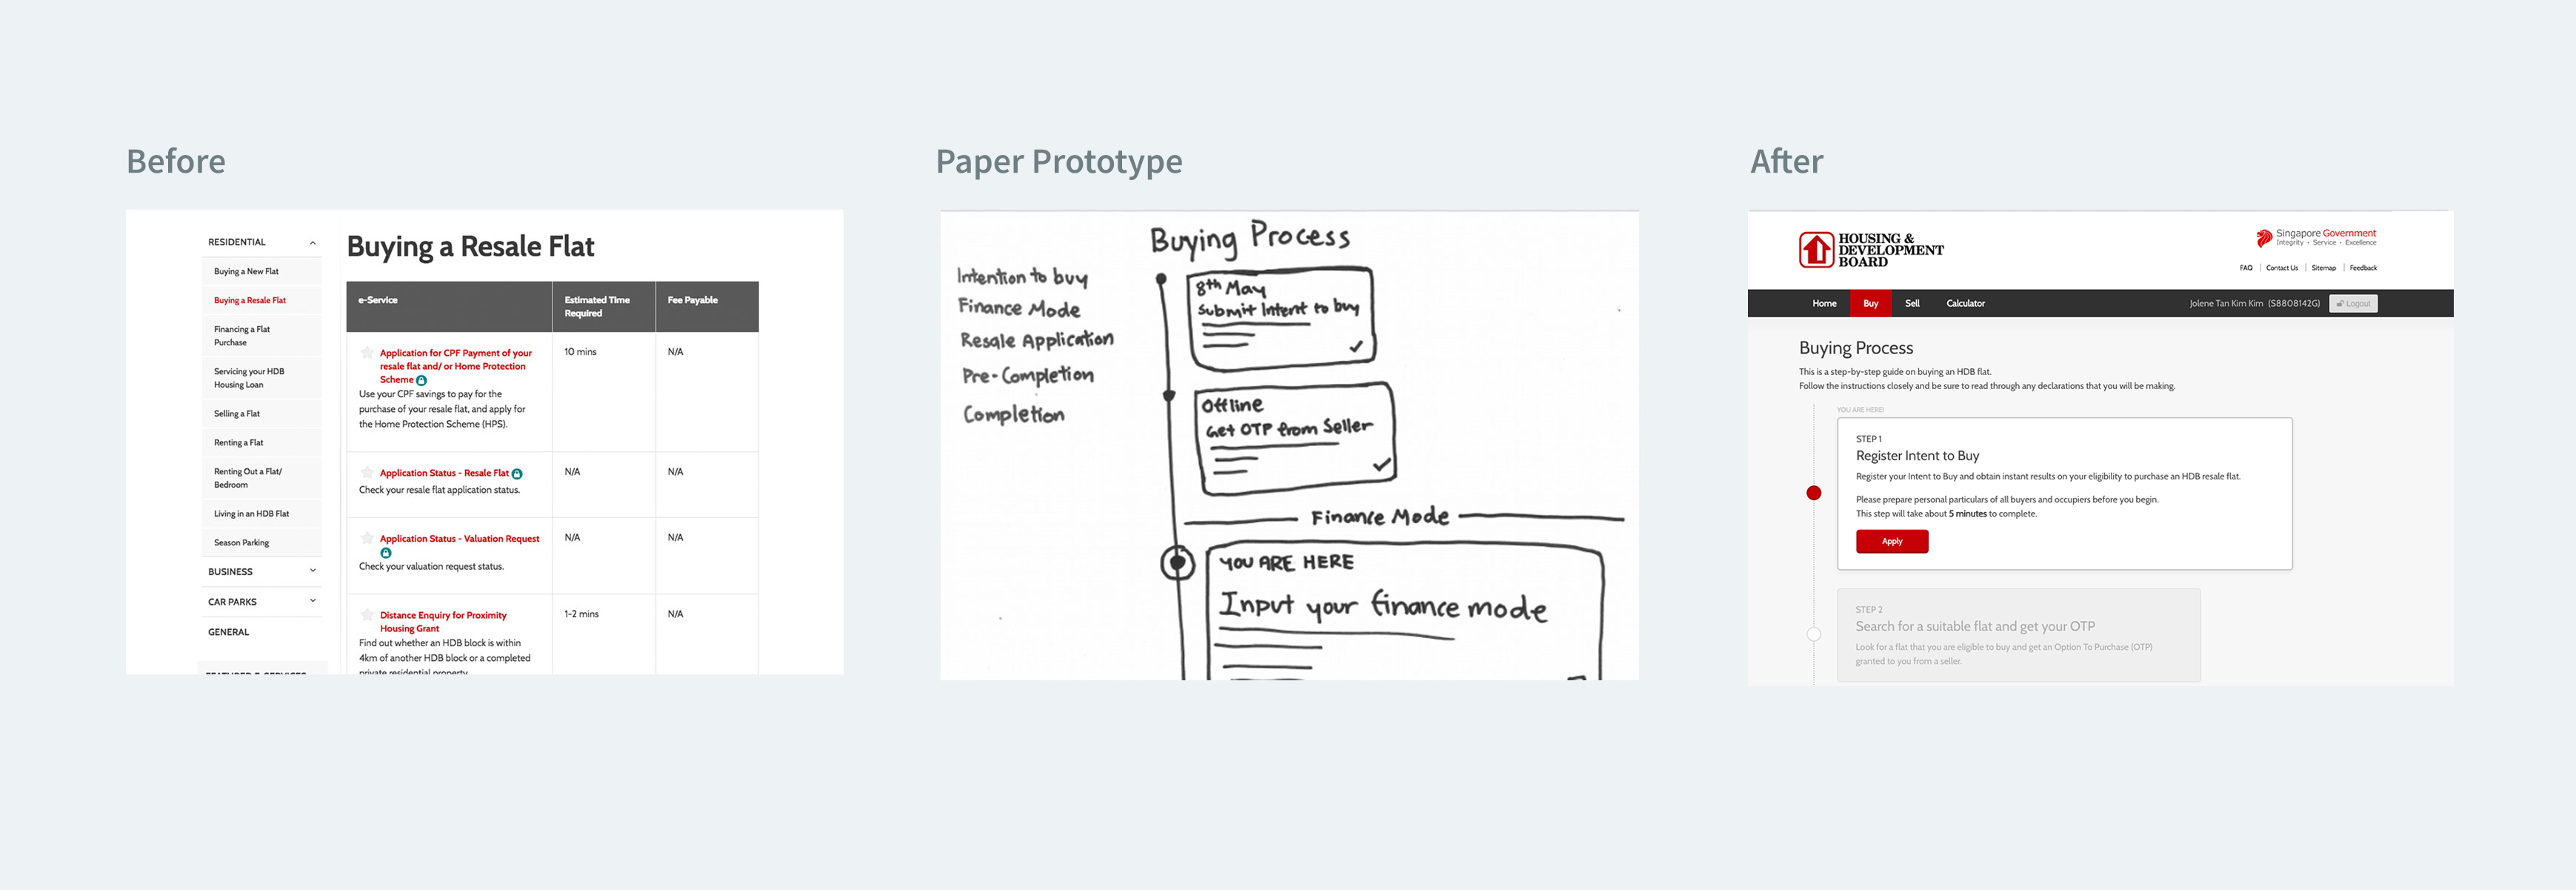 paper prototyping